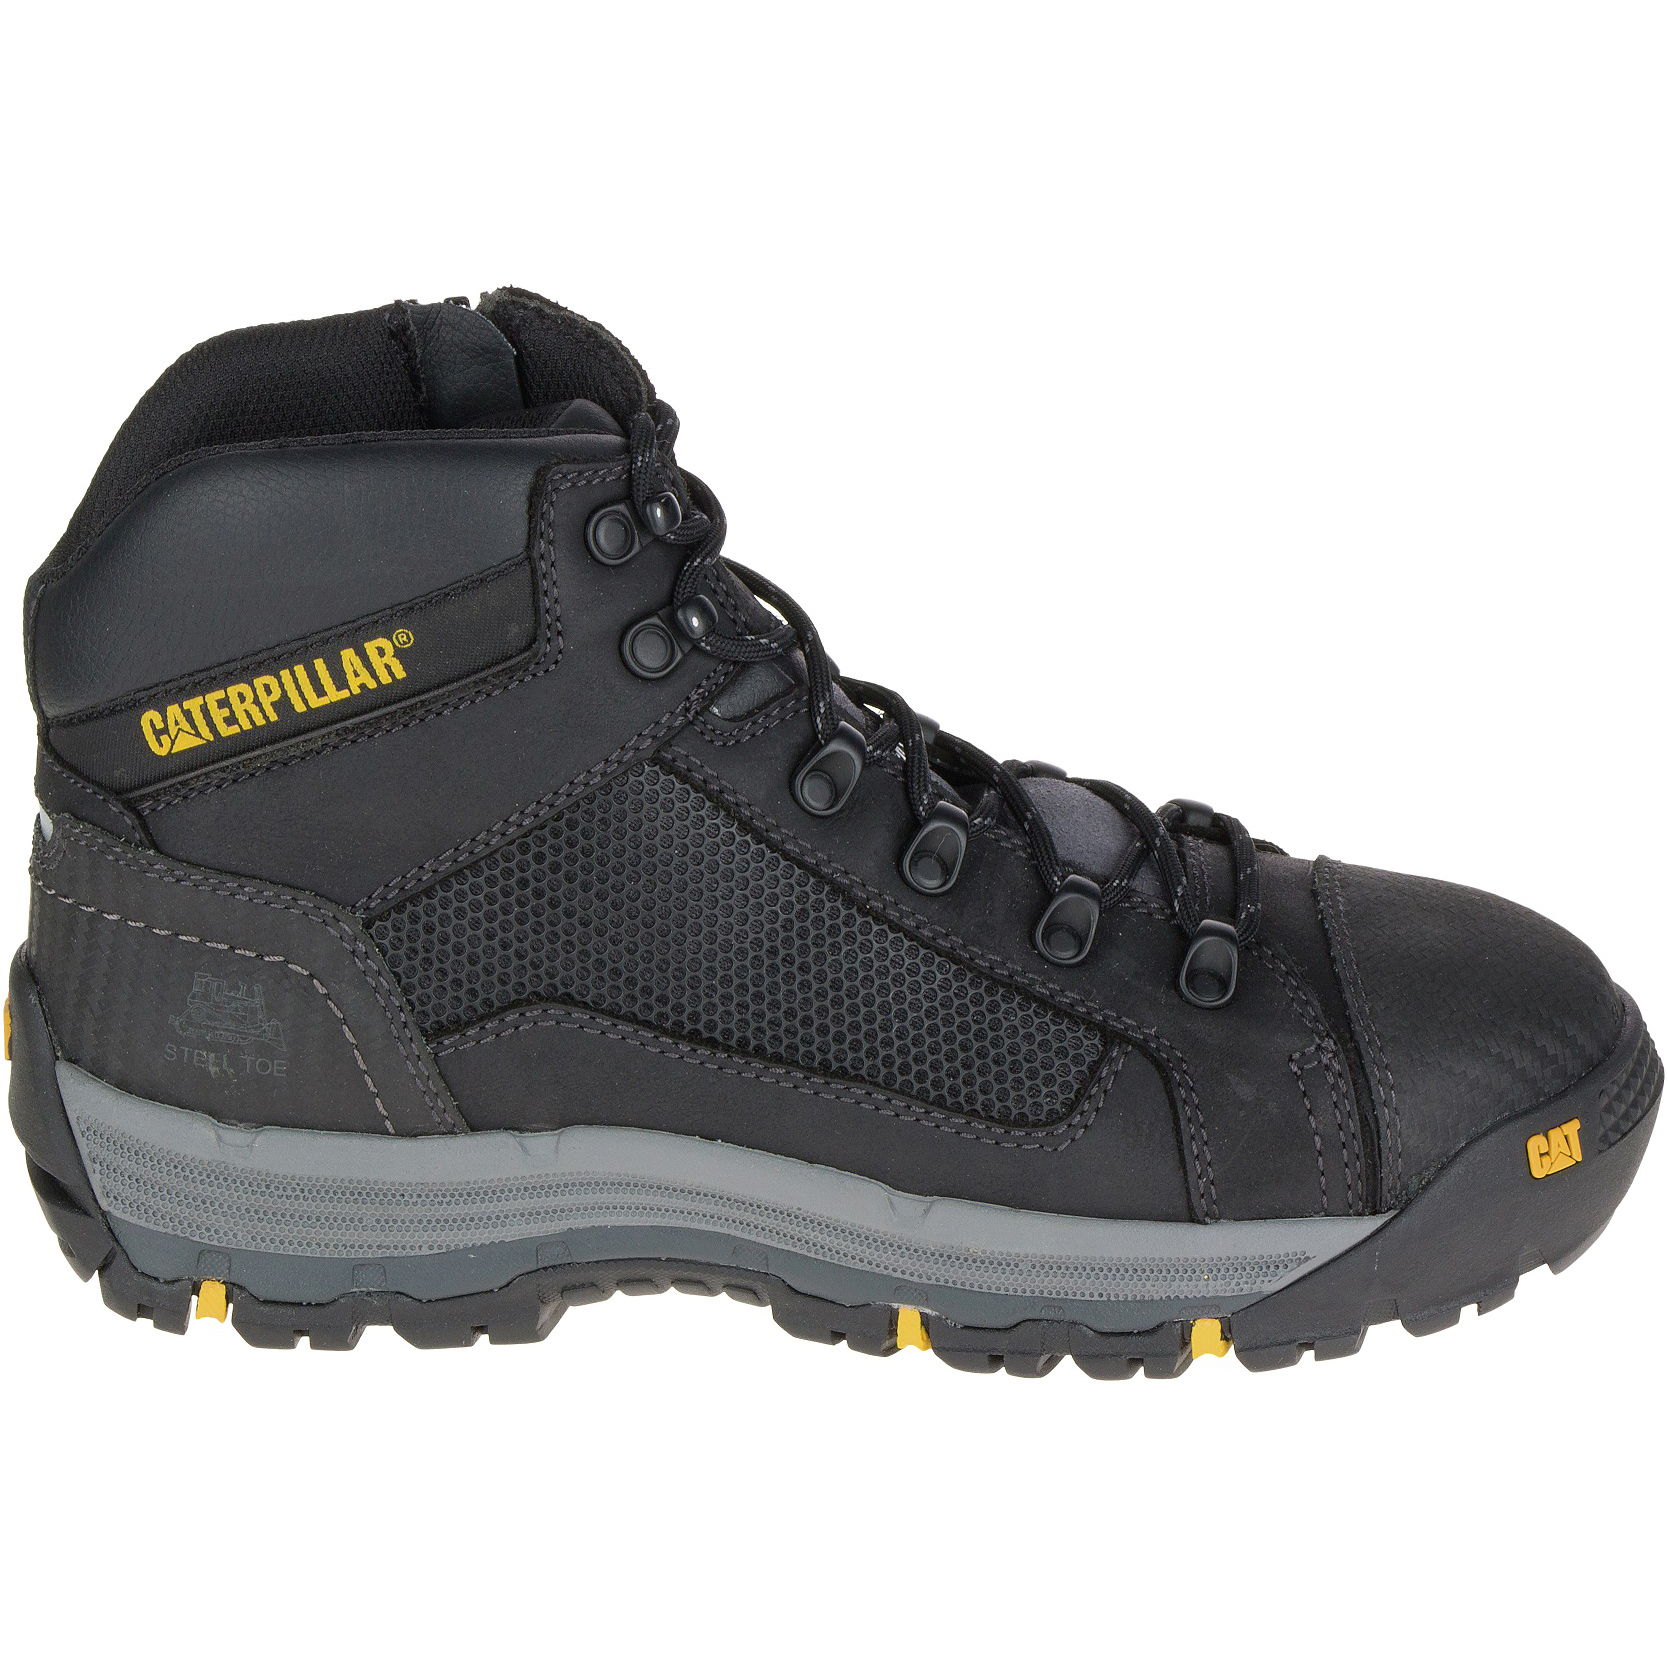 Caterpillar Work Boots UAE Online - Caterpillar Convex St Mid Mens - Black BHVWZT934